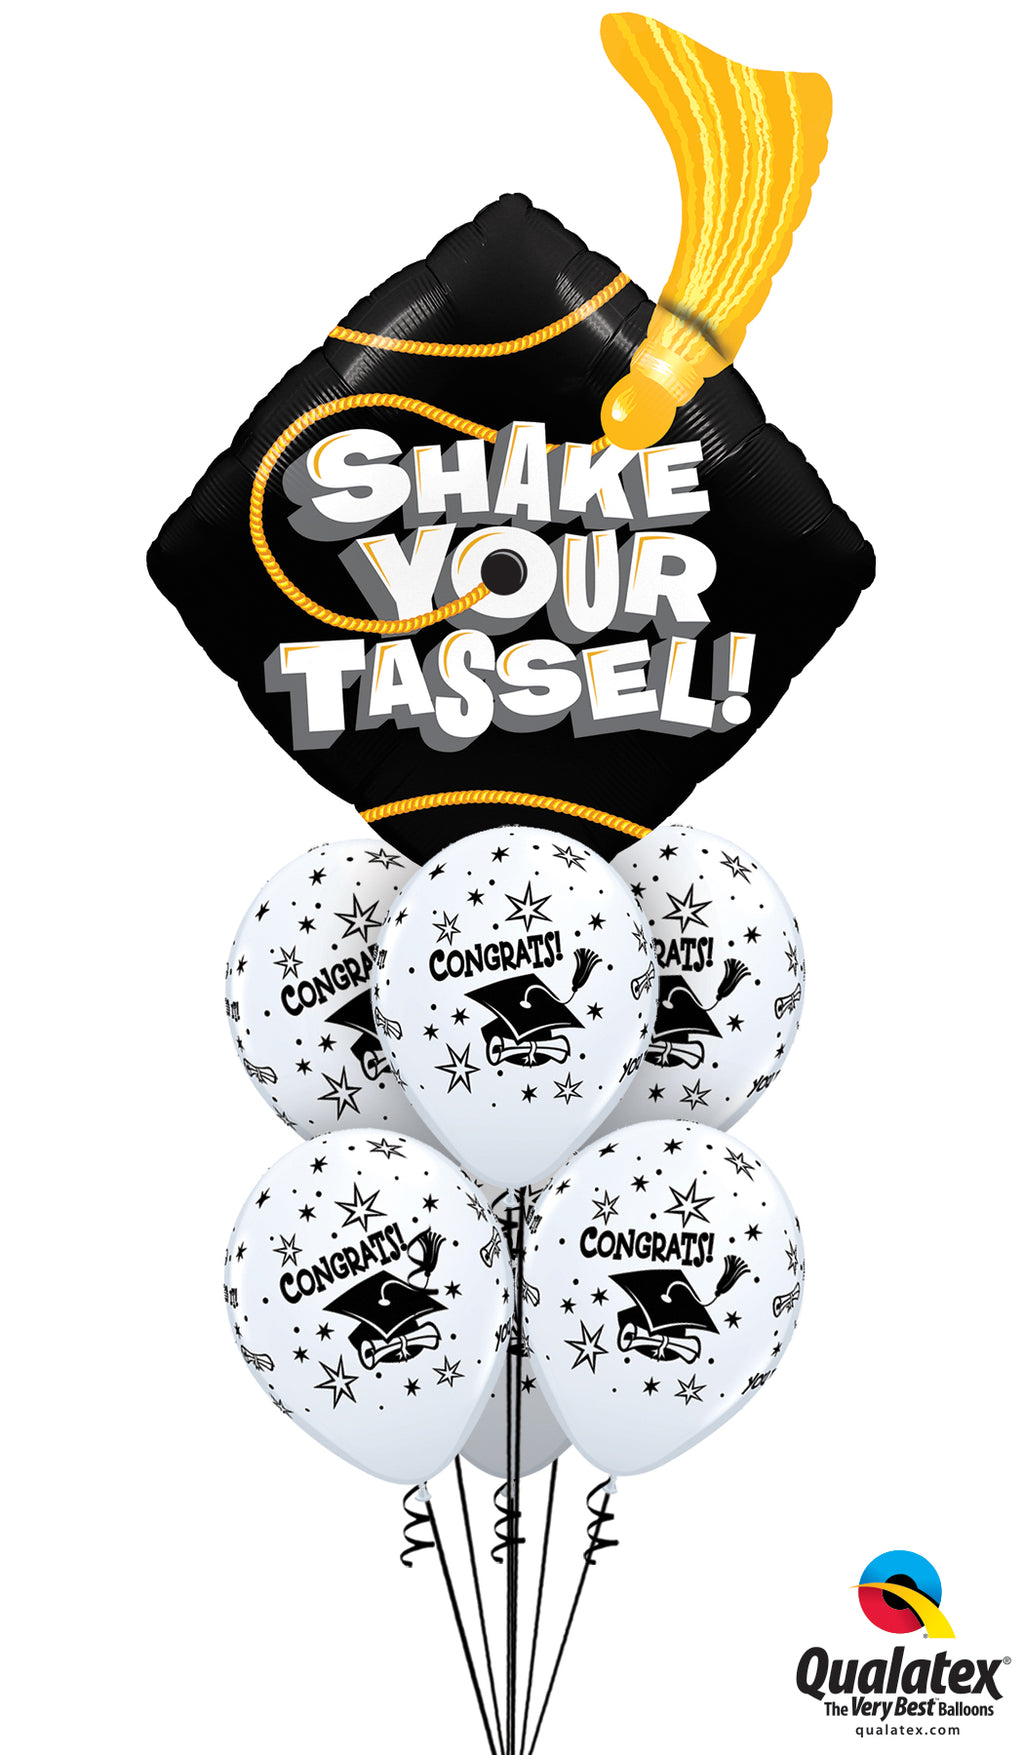 Shake your Tassel! - Balloon Express